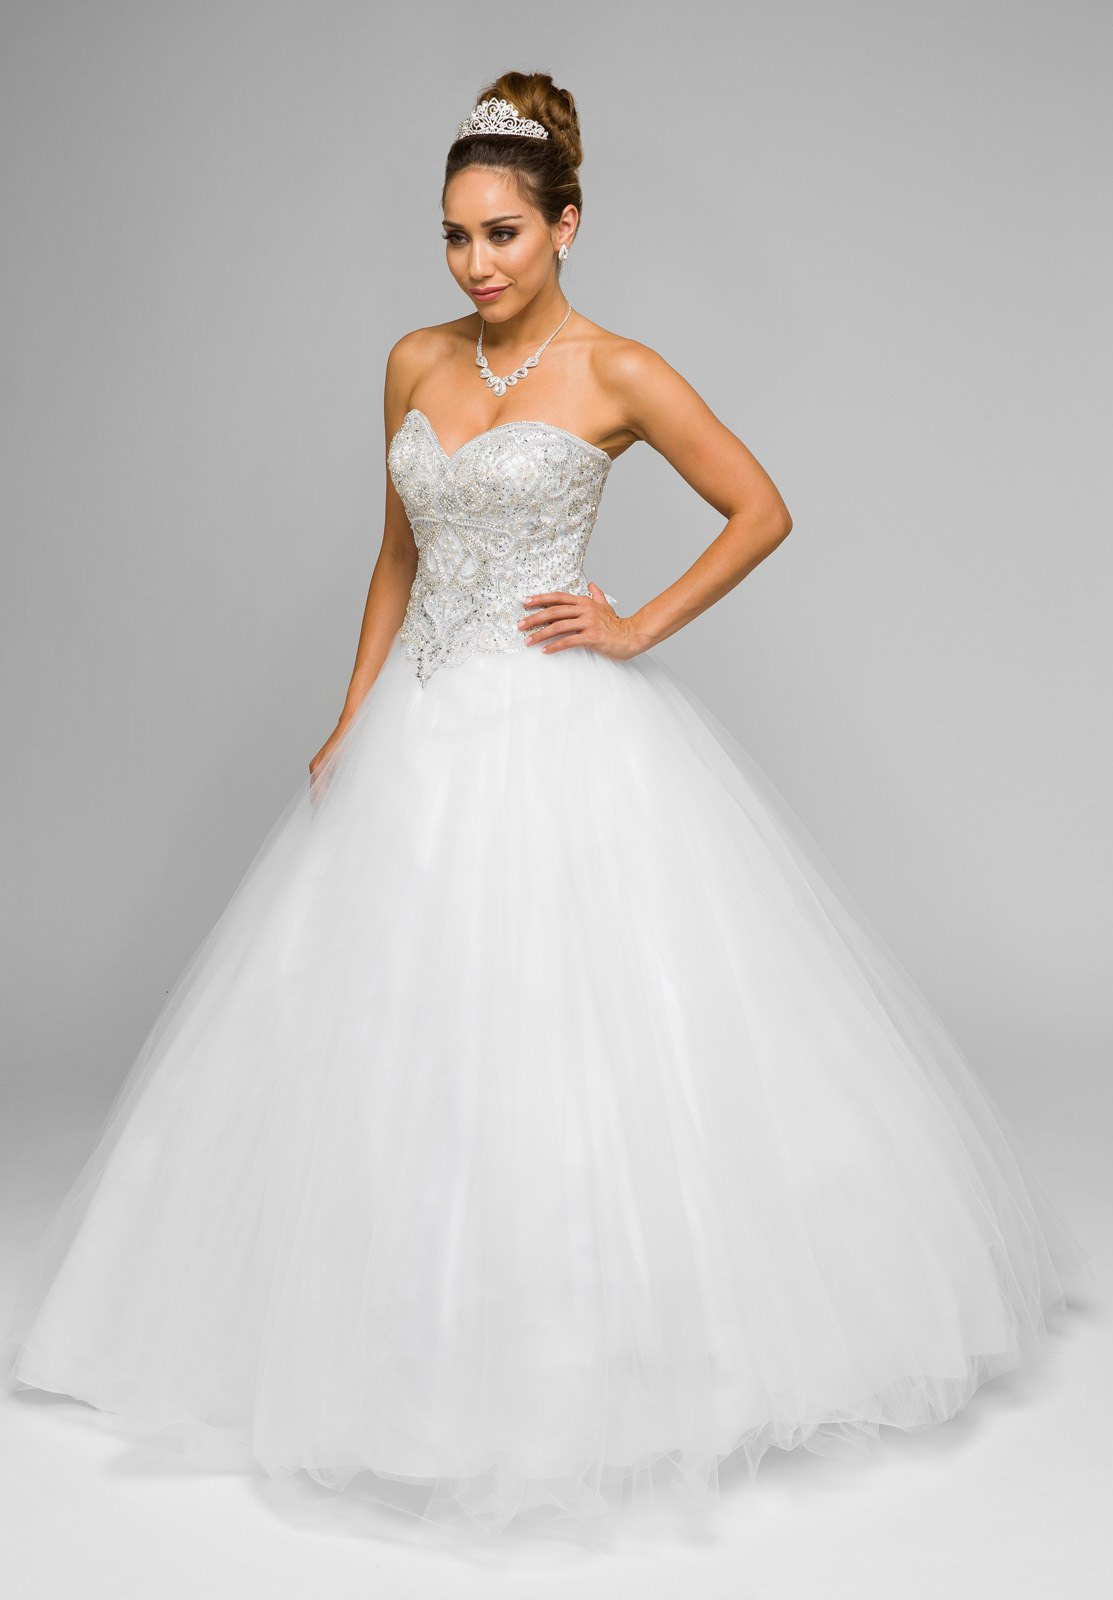 White Ball Gown Wedding Dresses
 White Beaded Bodice Strapless Ball Gown Wedding Dress with